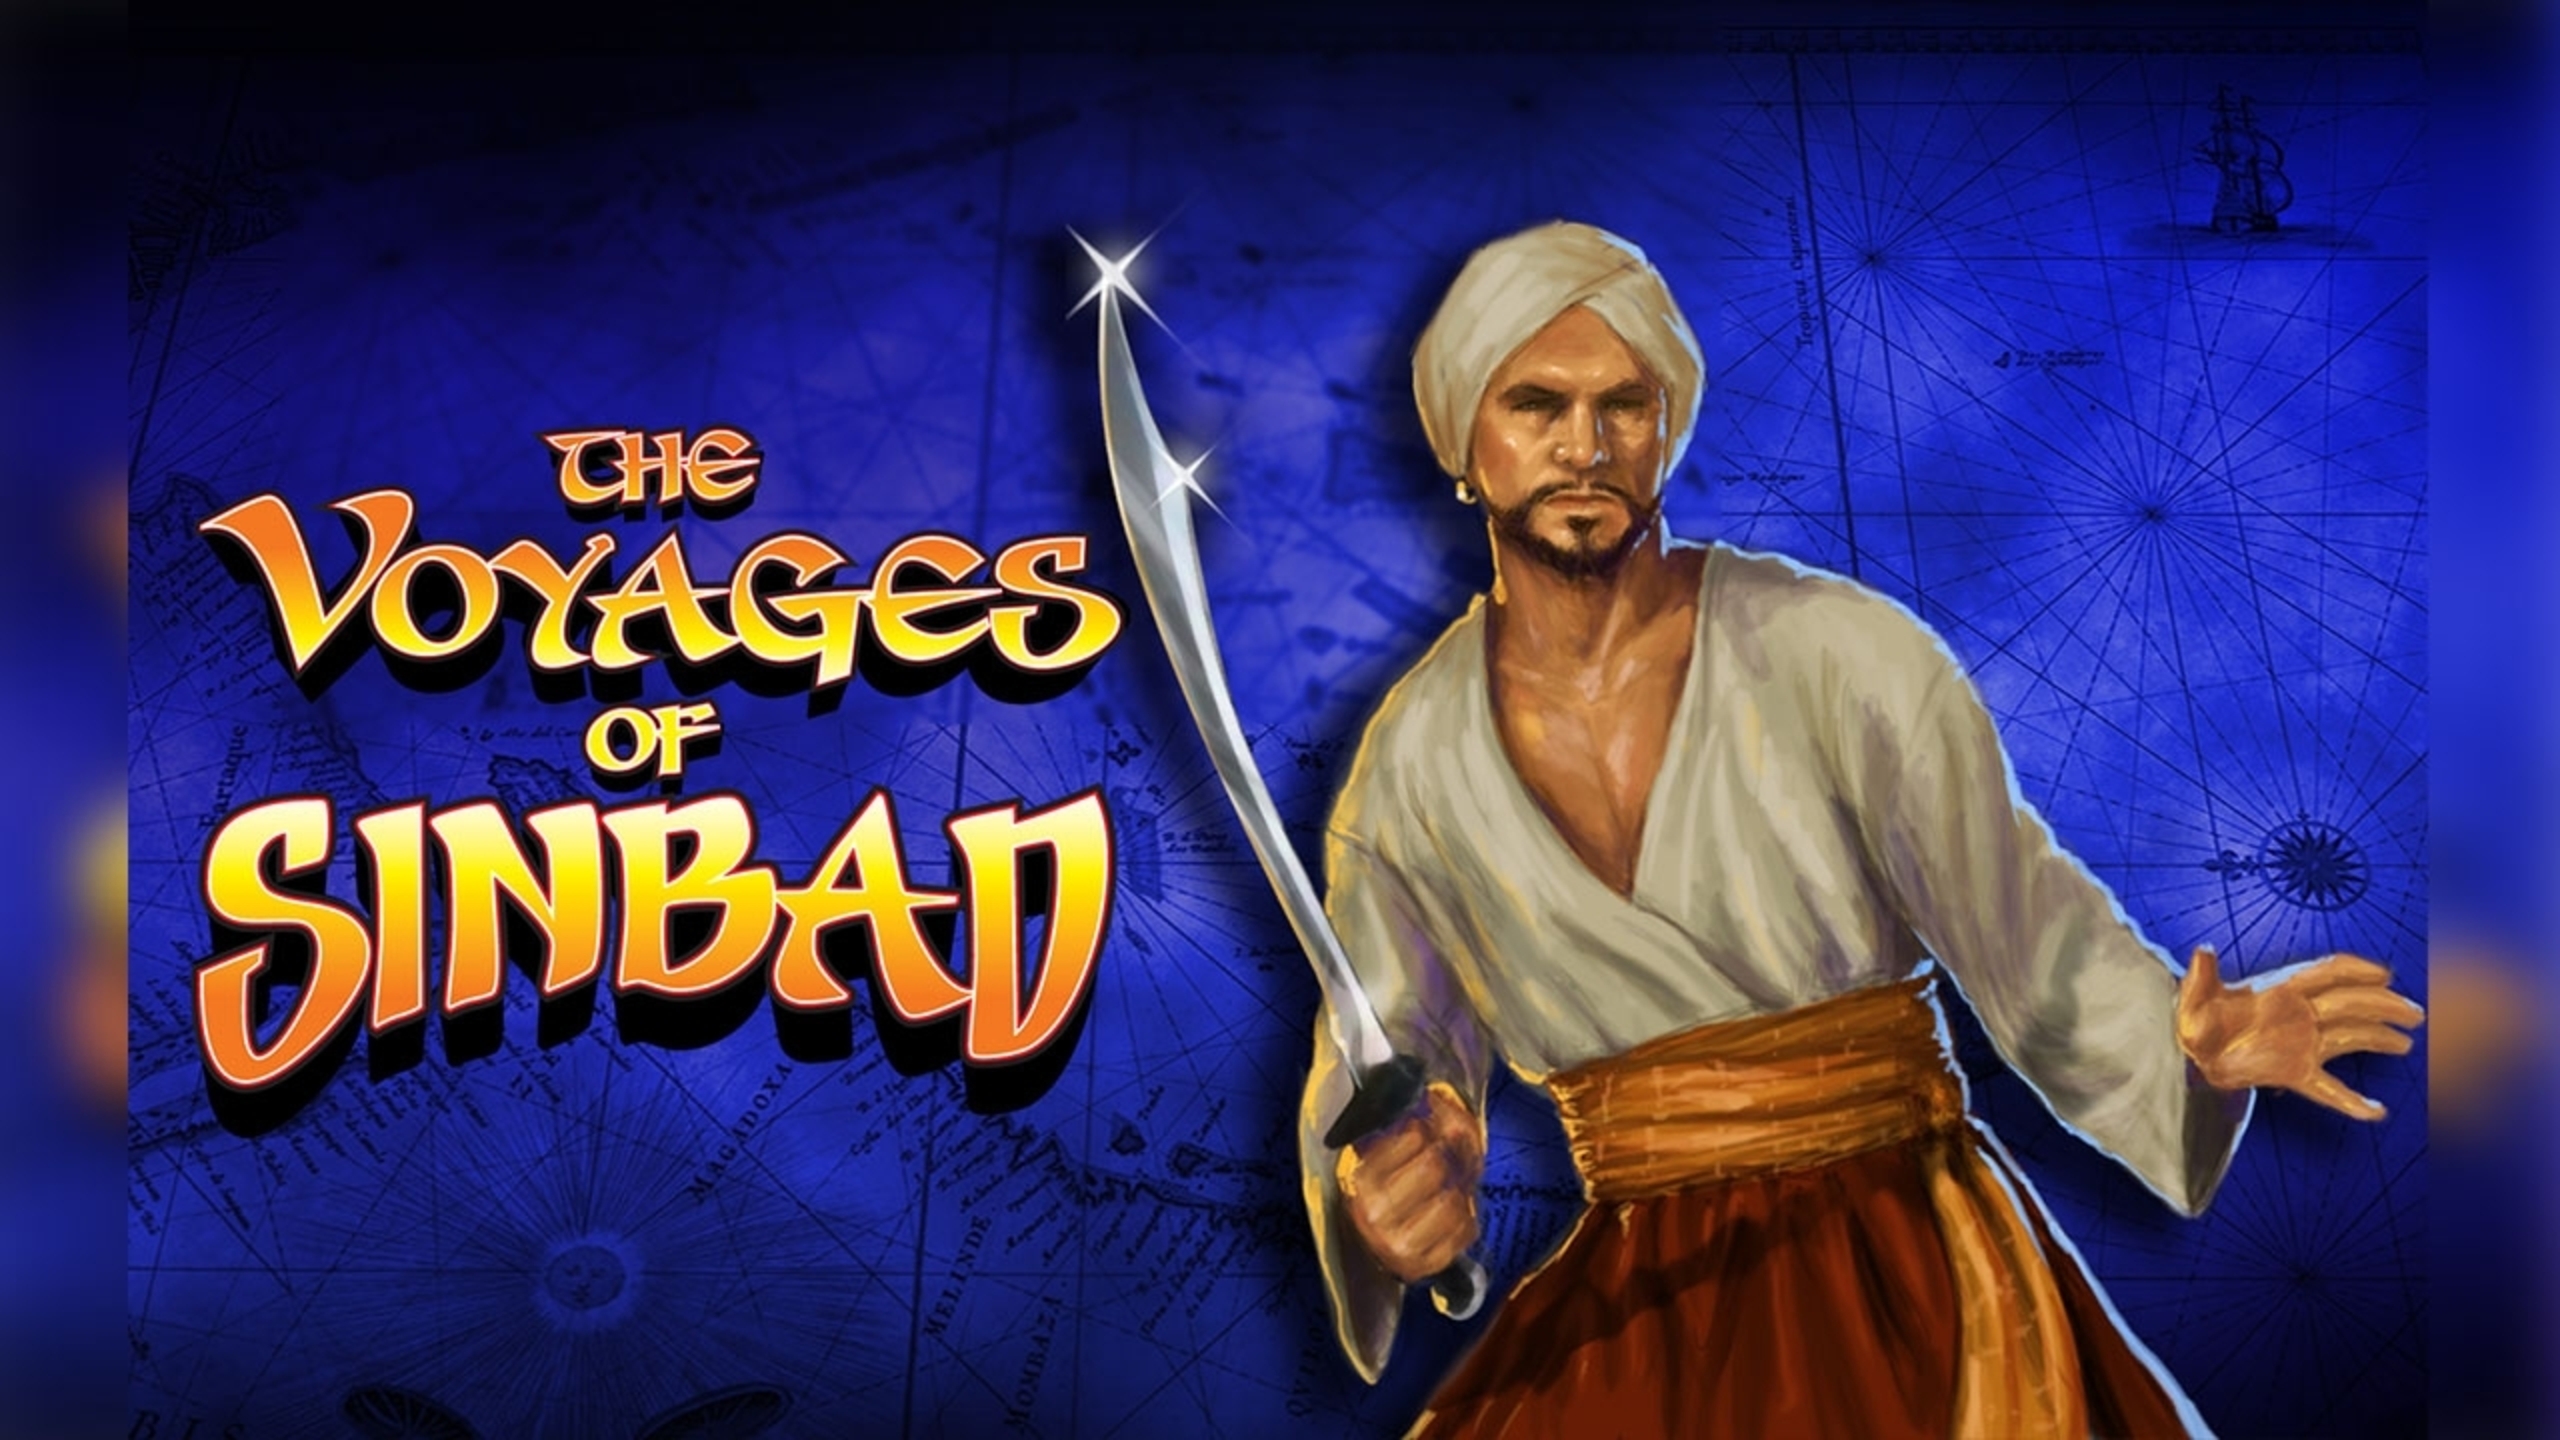 The voyages of Sinbad demo